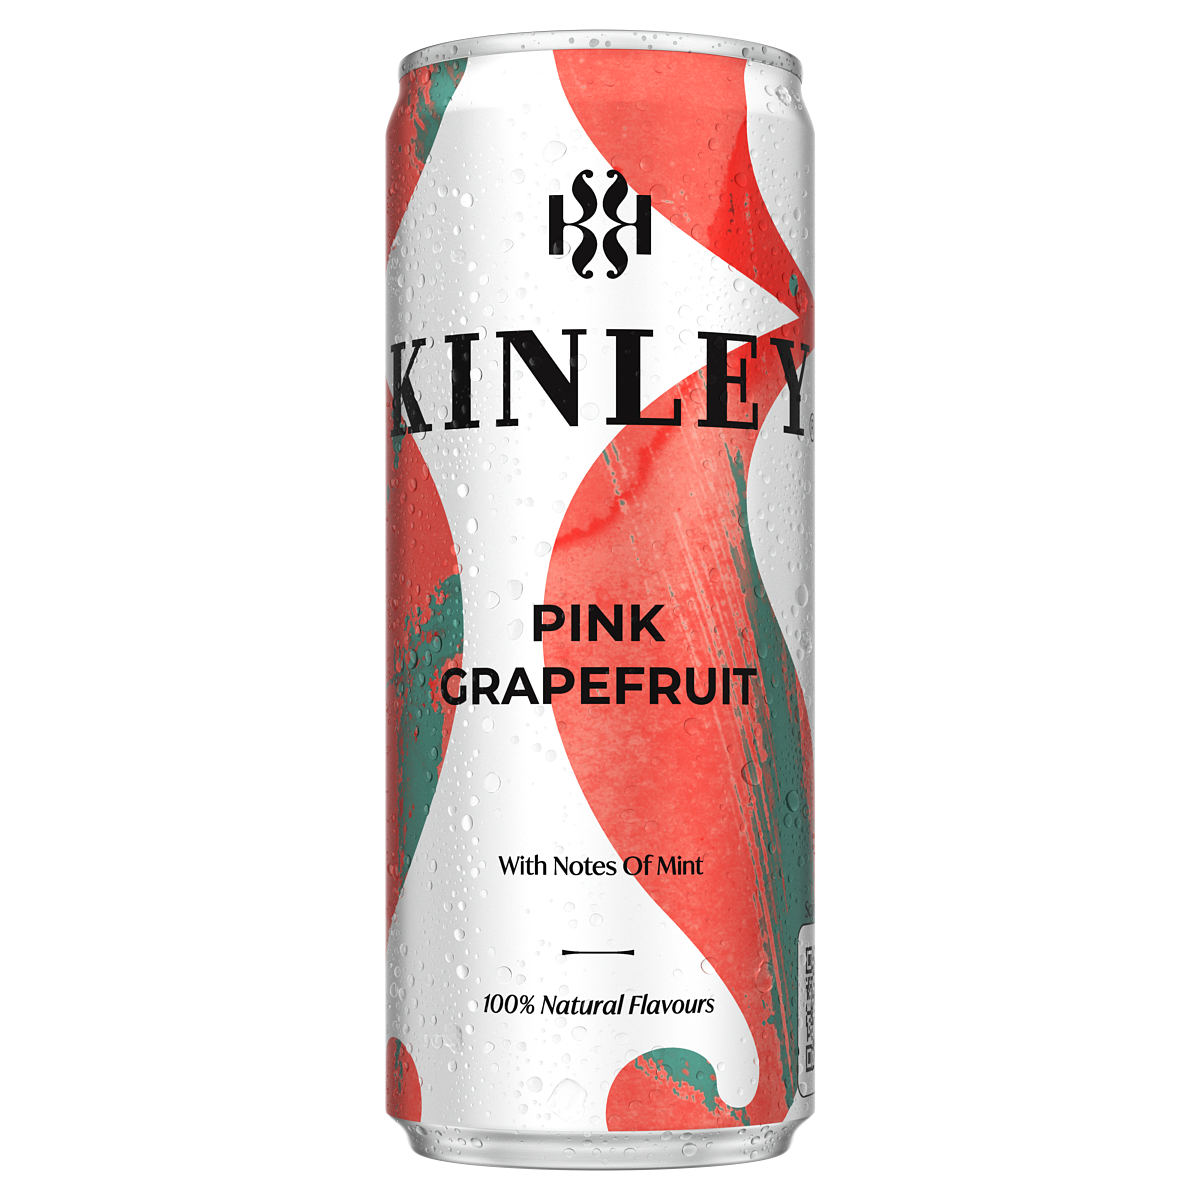 Kinley Pink Grapefruit 250ml Dose